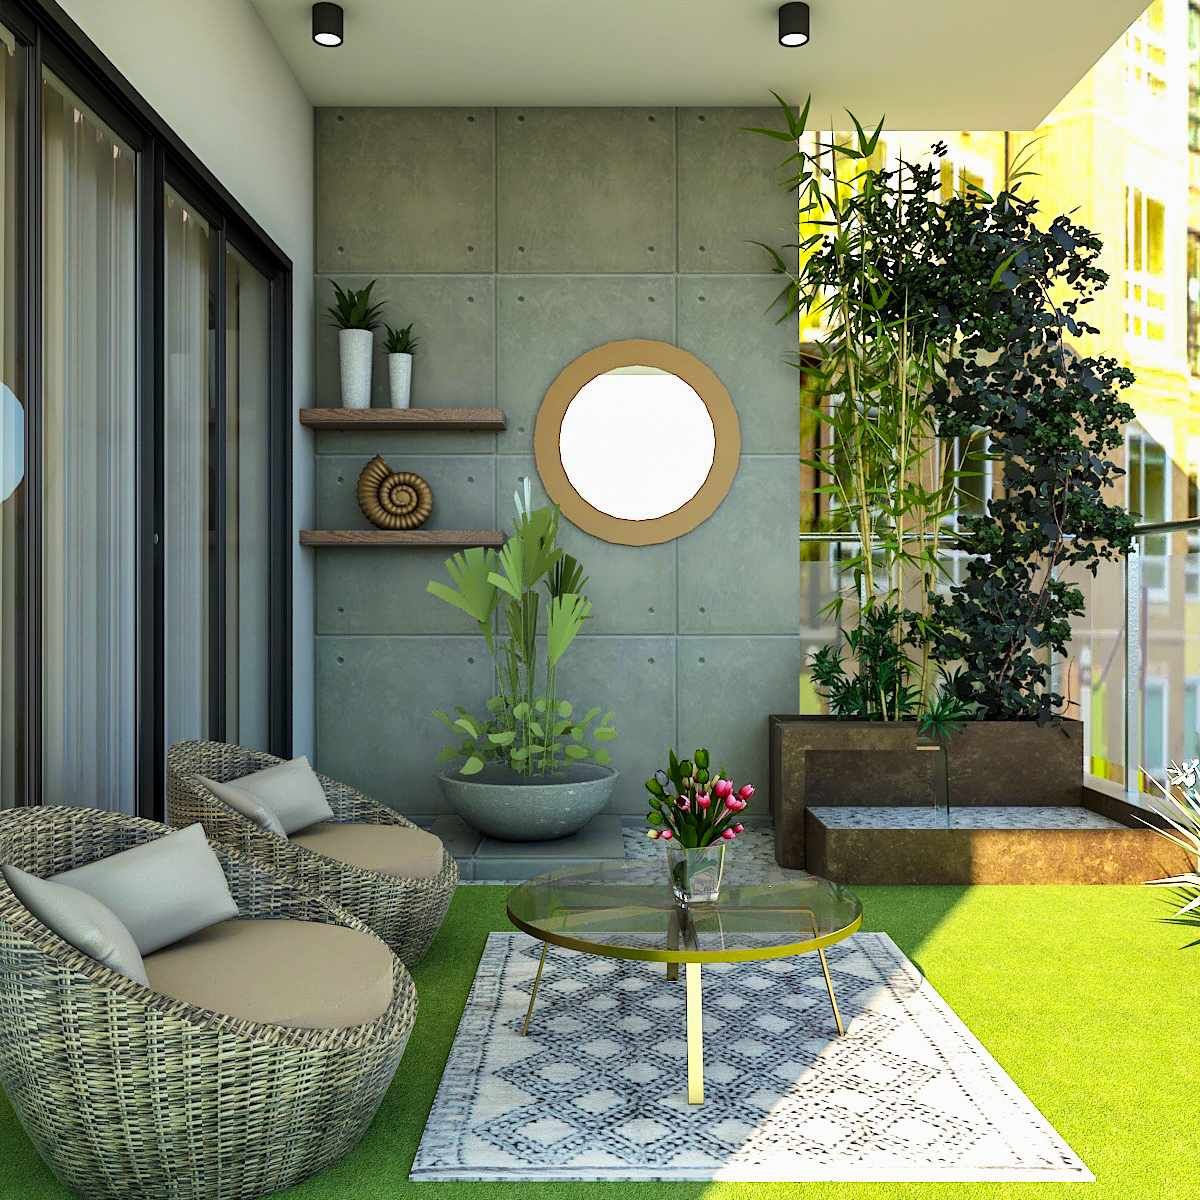 Tropical Balcony Design With Concrete Wall And Circular Mirror